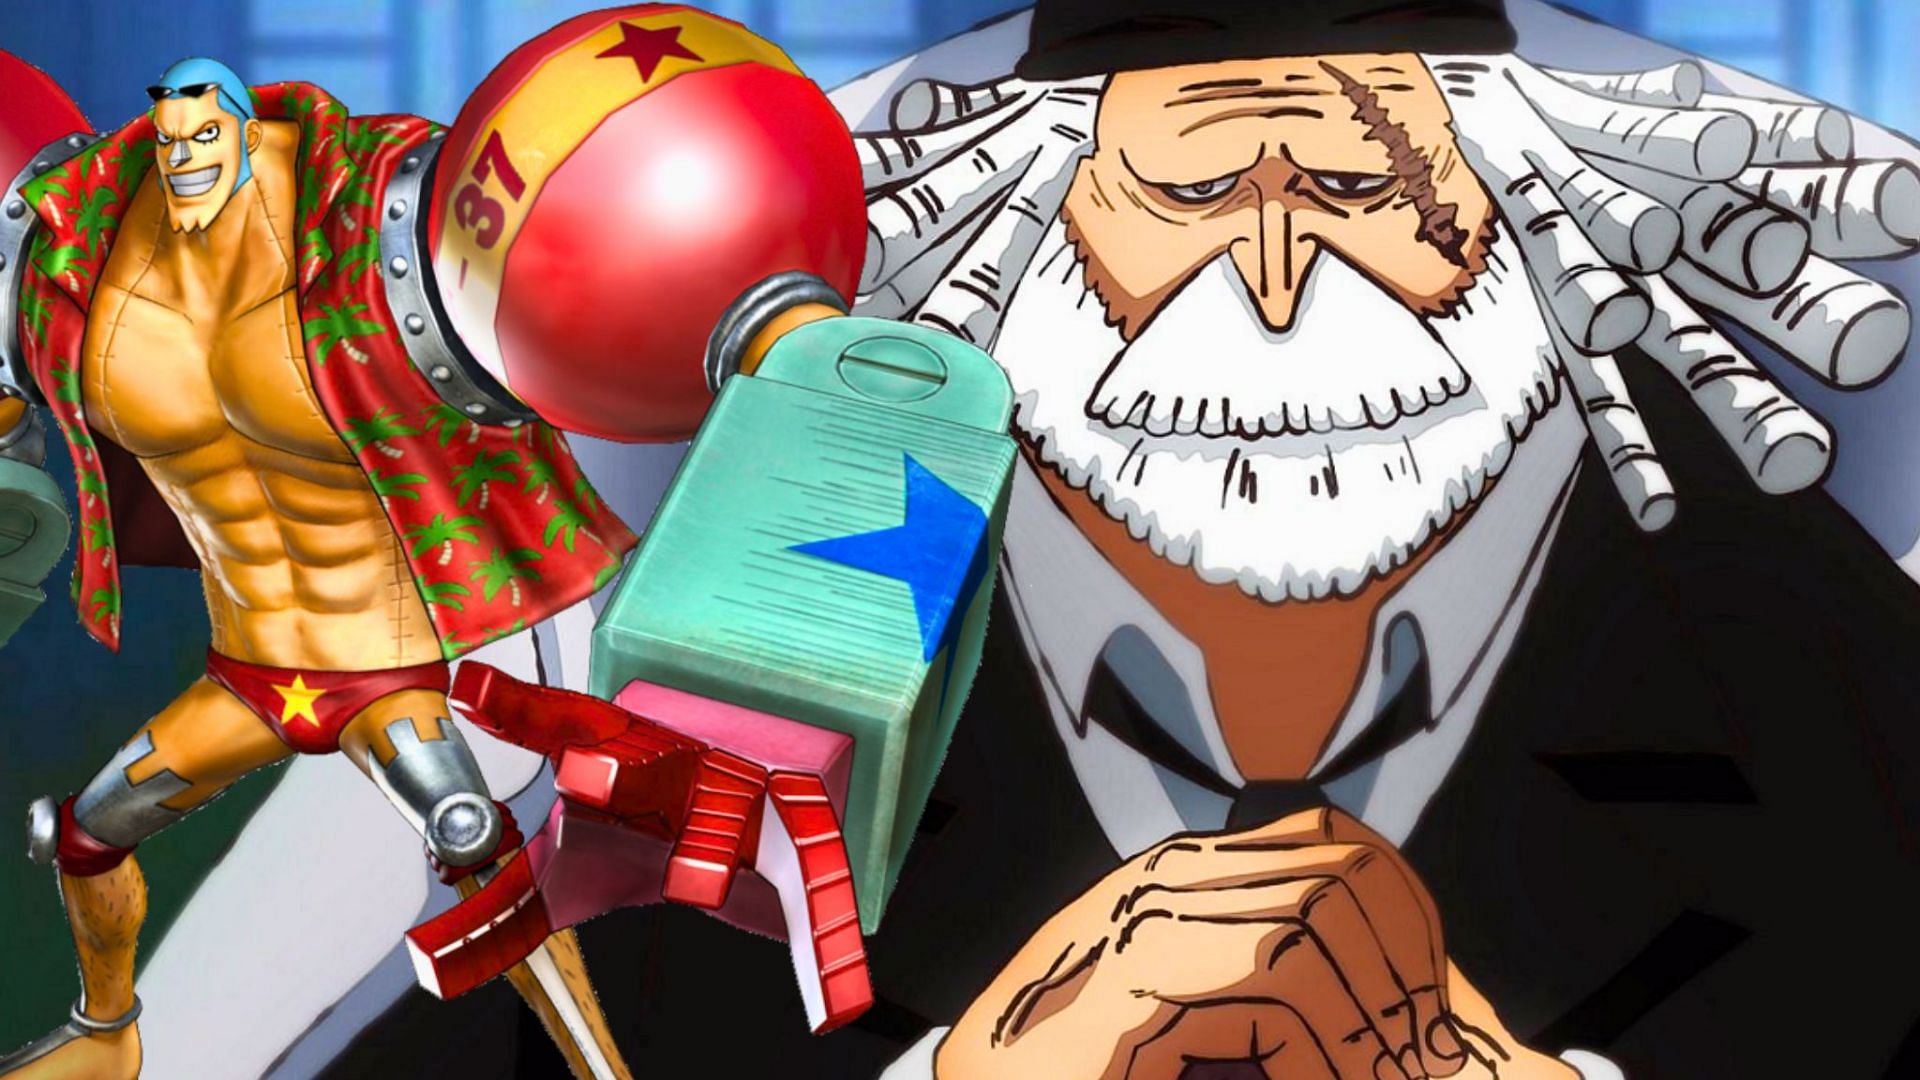 One Piece Chapter 1095 Spoilers & Manga Plot Leaks